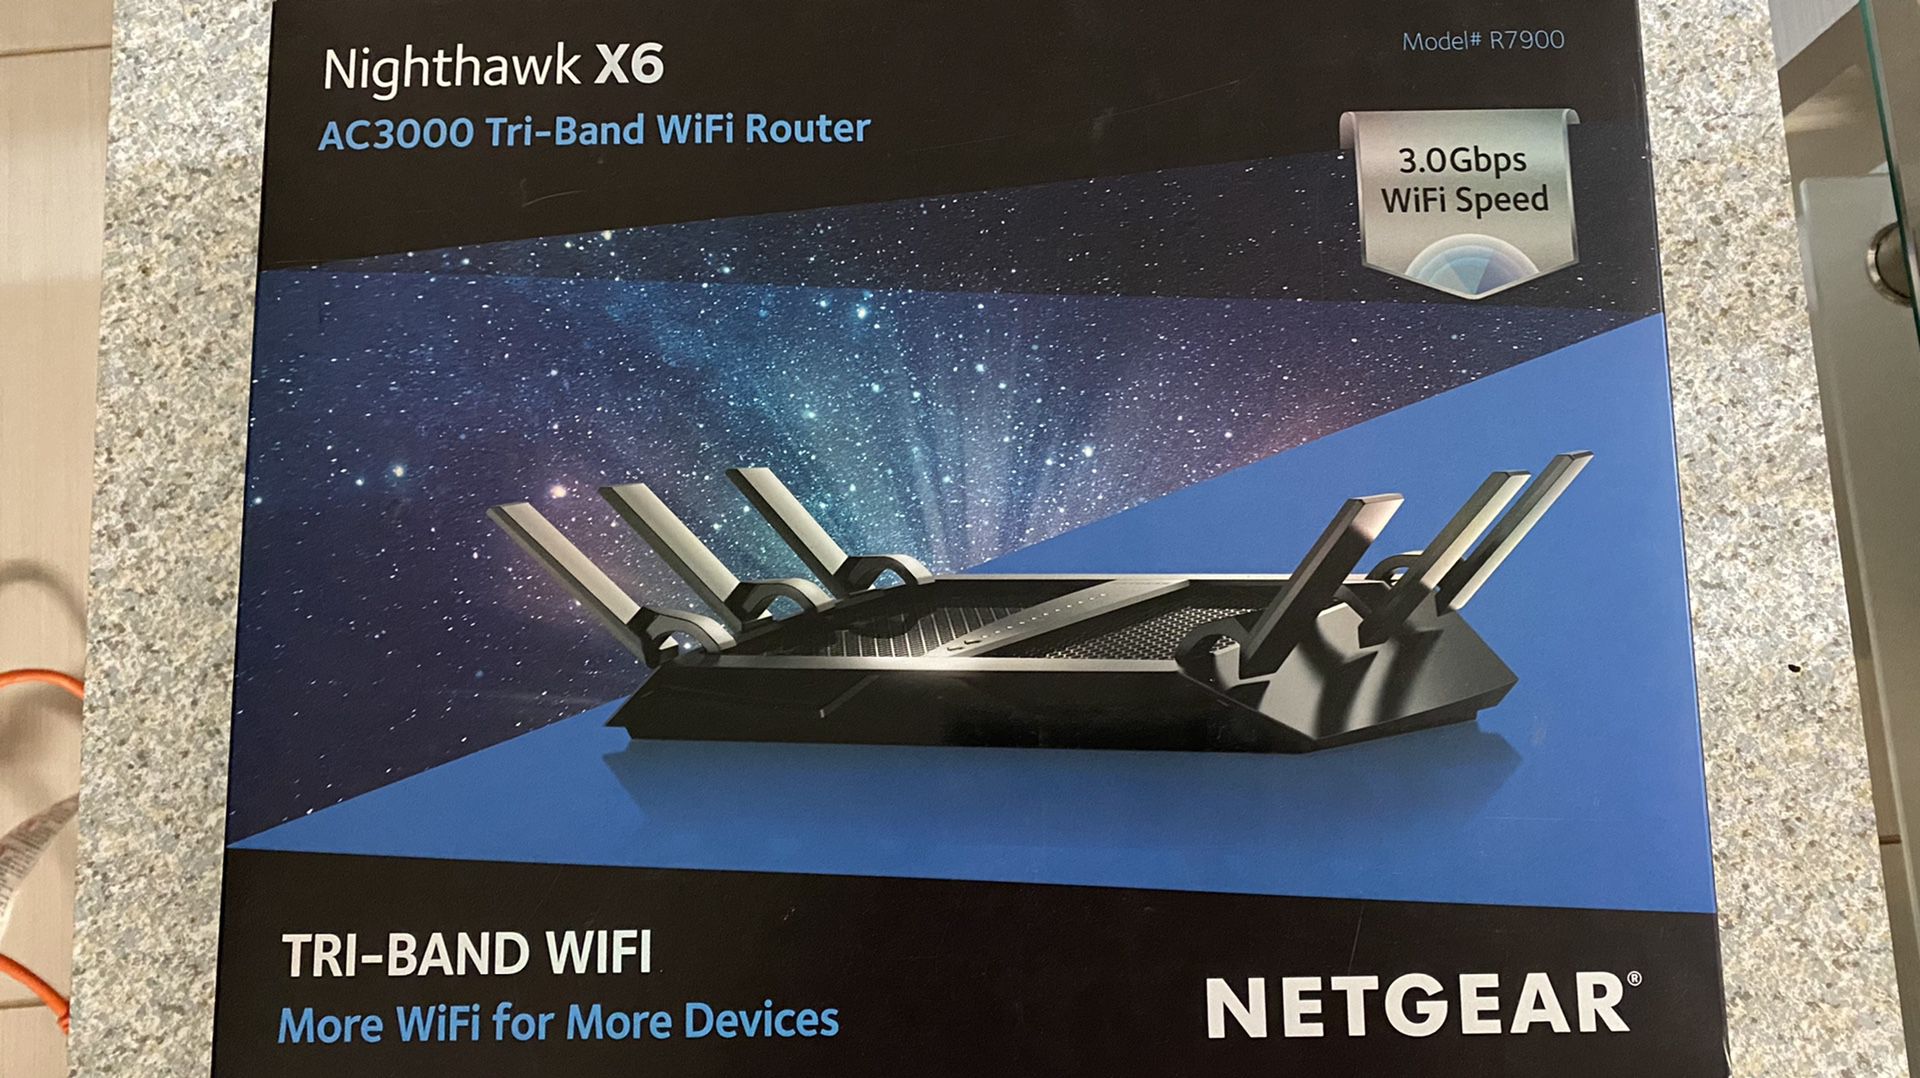 Netgear x6 tri-band wifi router